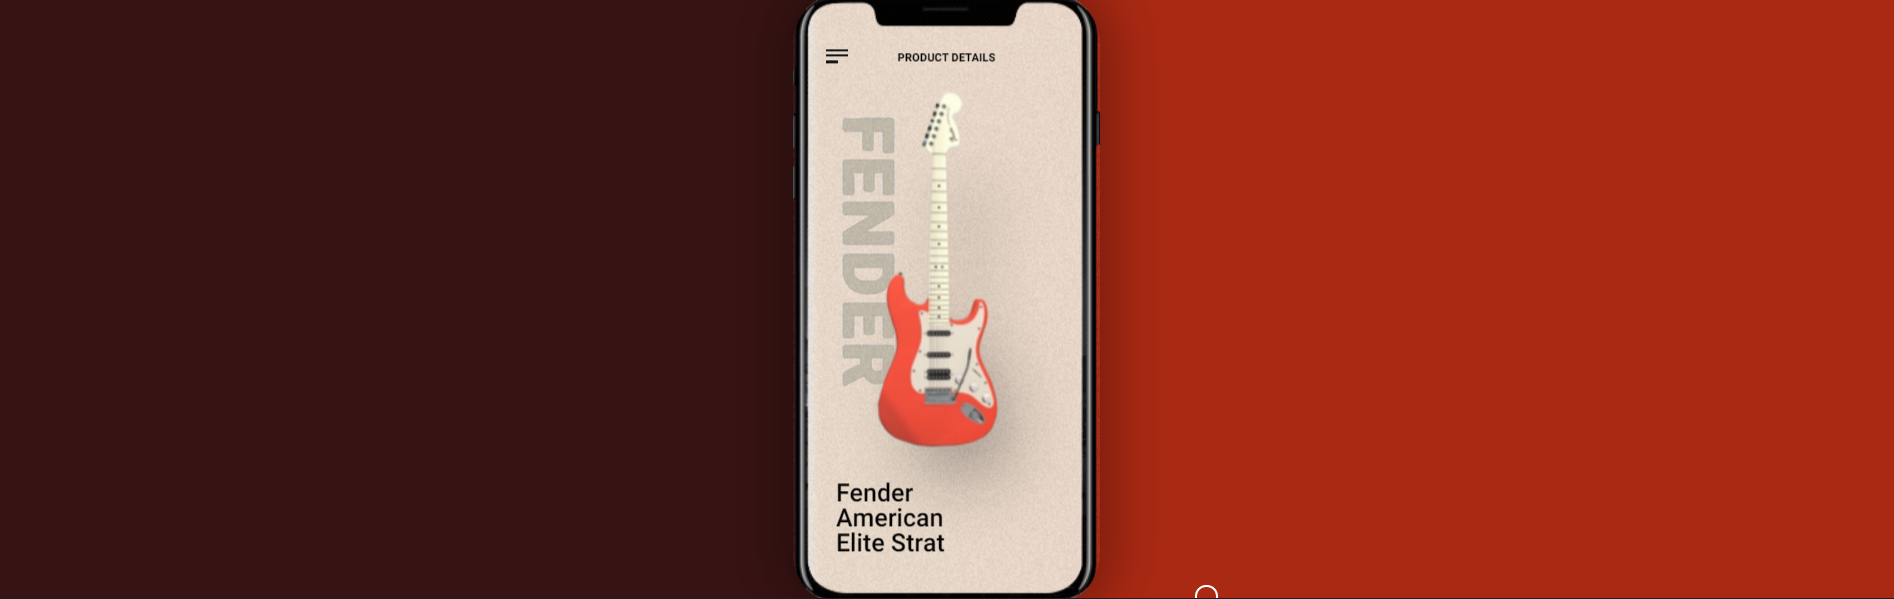 CSS Phone with 3D Drag Out Guitar Menu